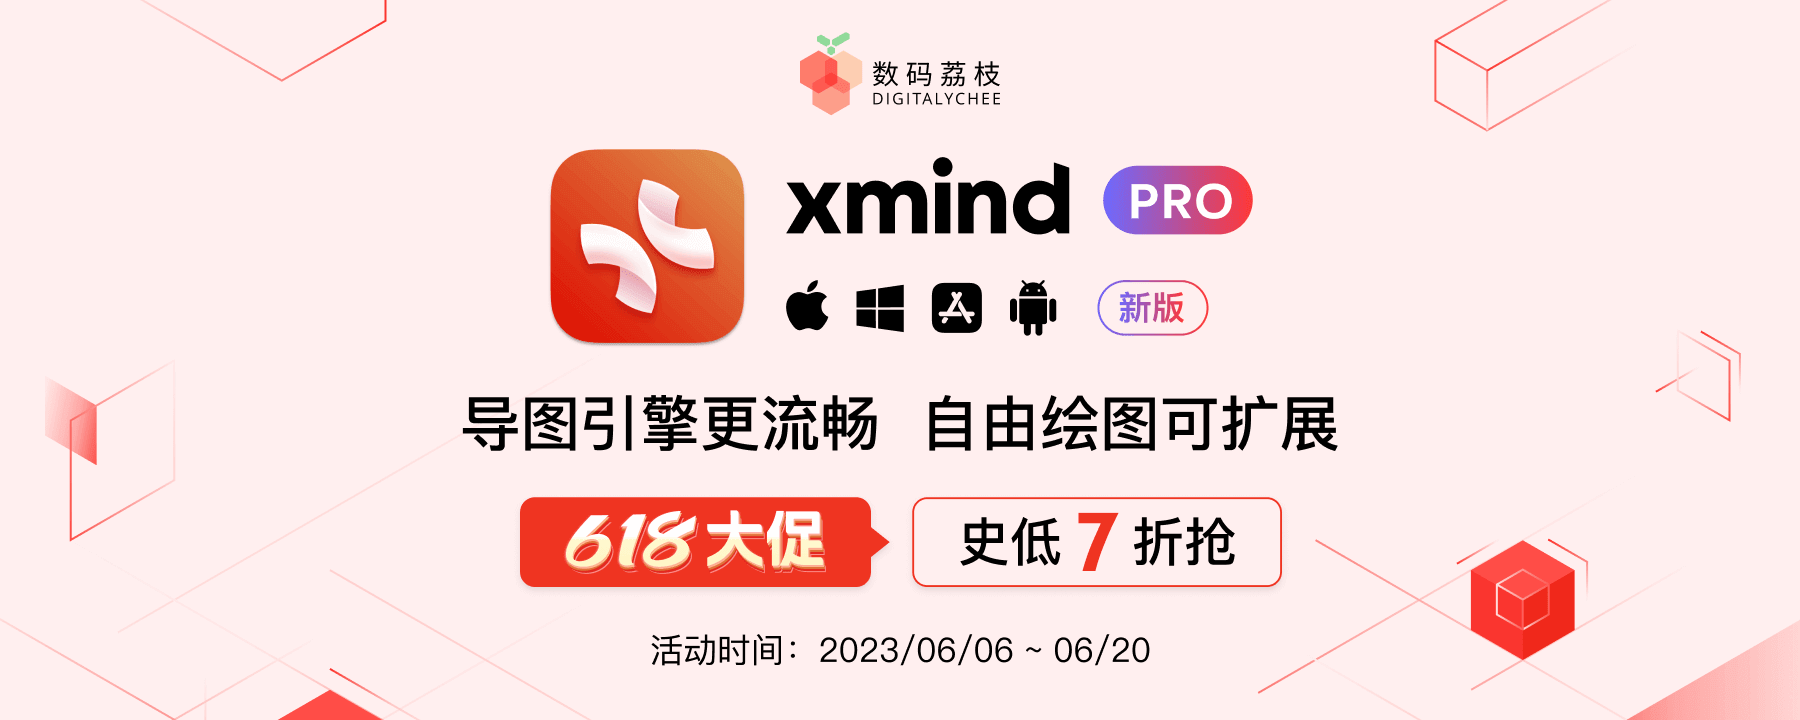 XMind 2023 v23.09.09172 instal the new for windows